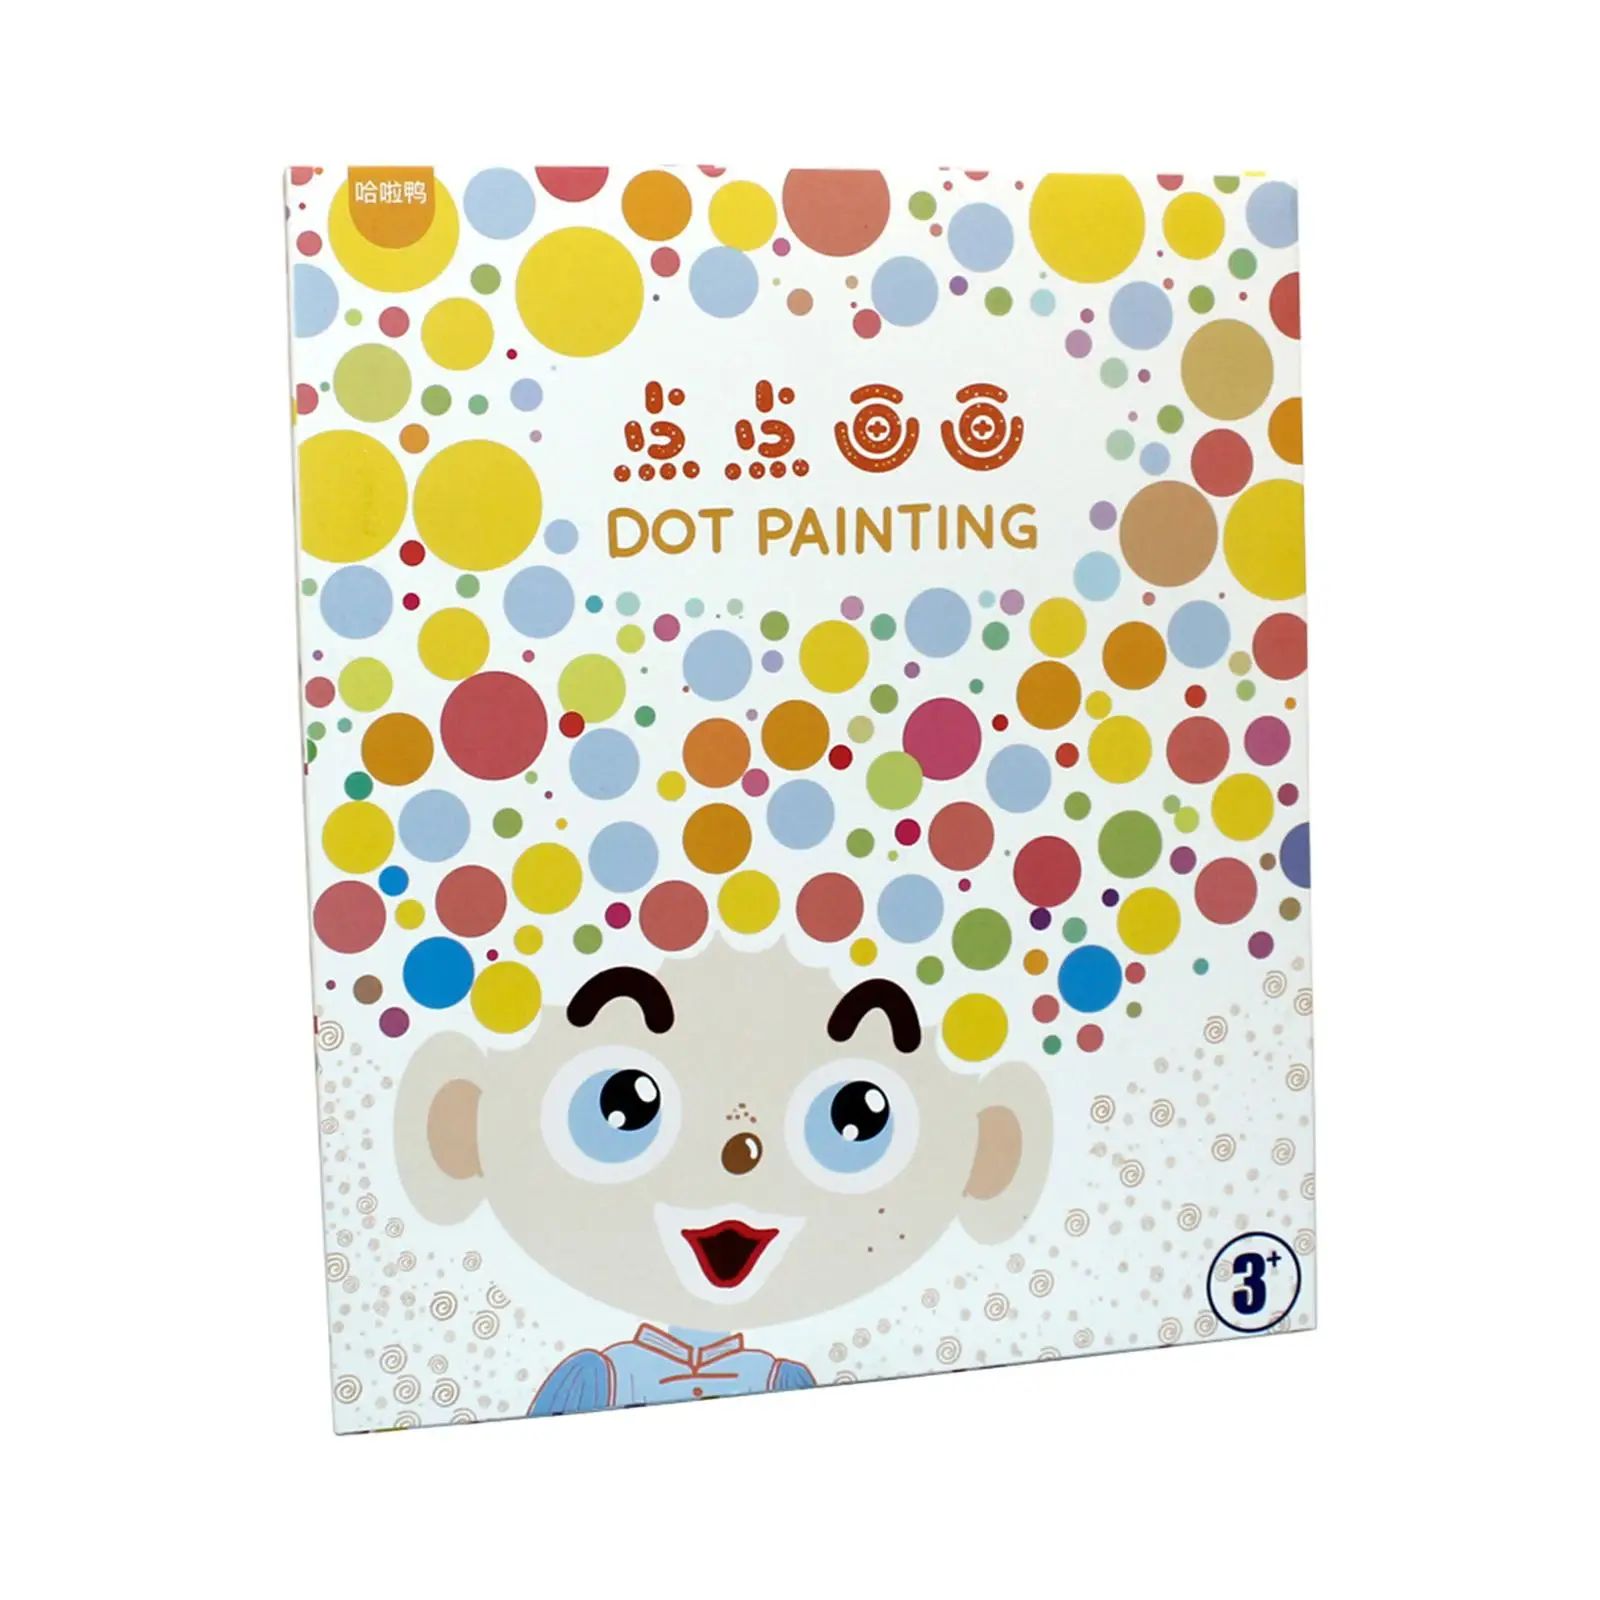 30x Dot Coloring Papers Book Birthday Gift DIY Daot Painting Papers for Age 3+ Kids Boys Girls Preschool Kindergarten Activities